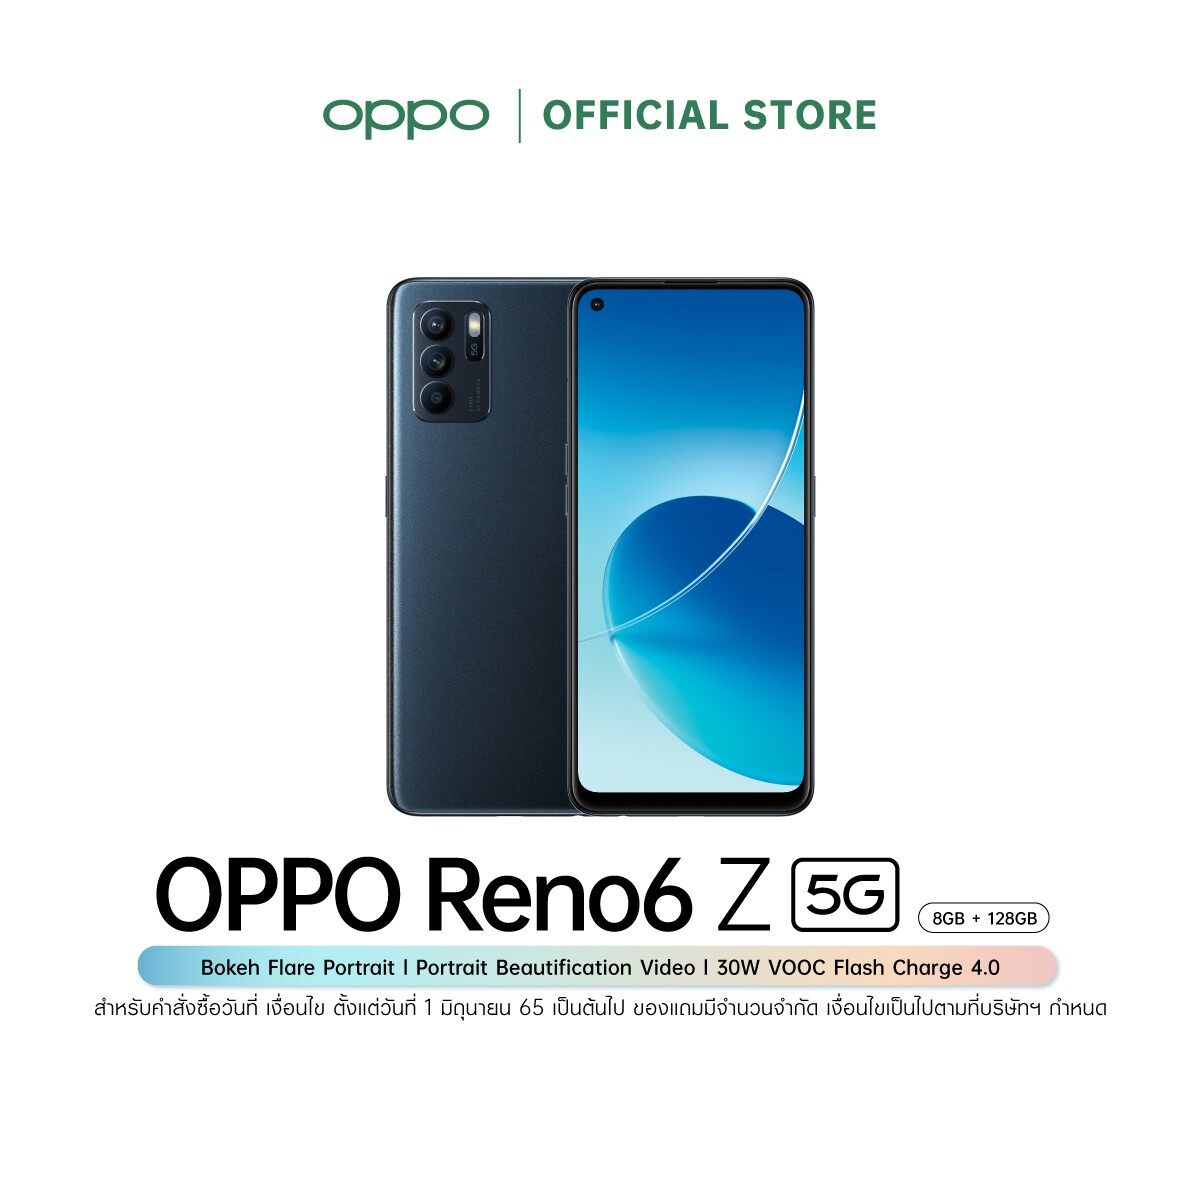 [New] OPPO Reno6 Z 5G (8+128) โทรศัพท์มือถือ กล้องหลัง 64 ล้านพิกเซล หน้าจอ 6.43 นิ้ว พร้อมของแถม รับประกัน 12 เดือน